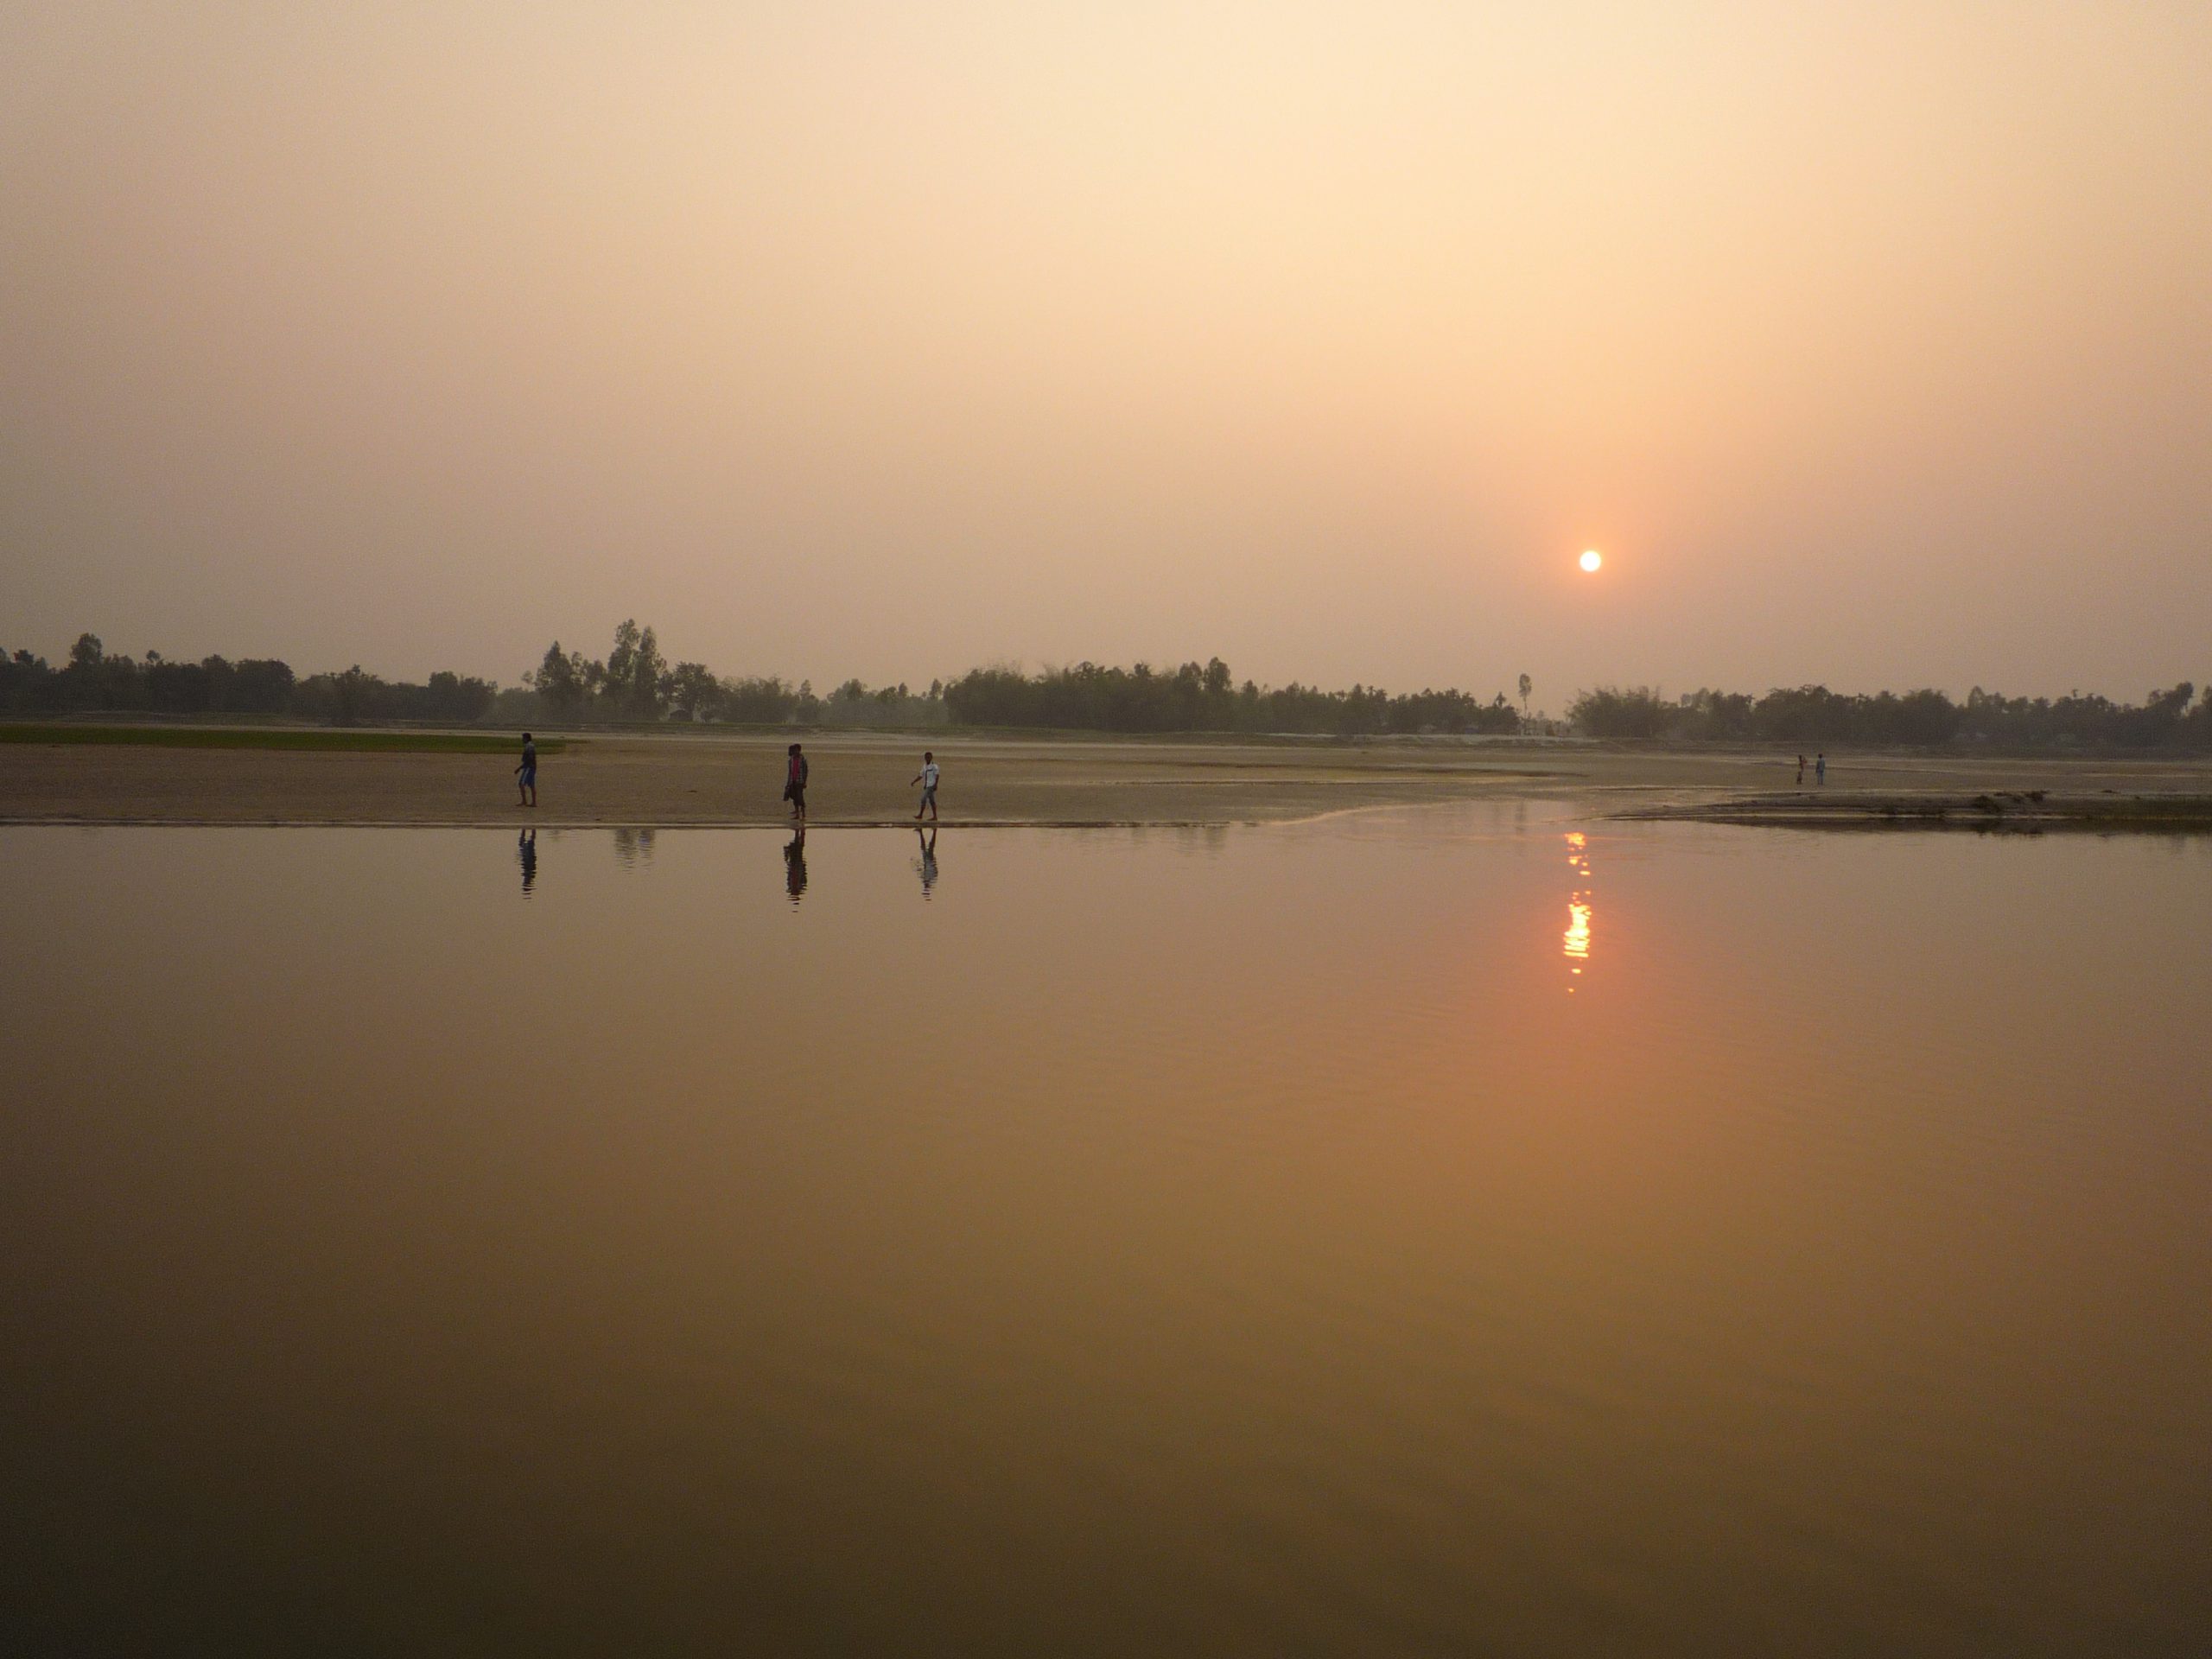 Sunset along the Teesta river. Image source: International Rivers